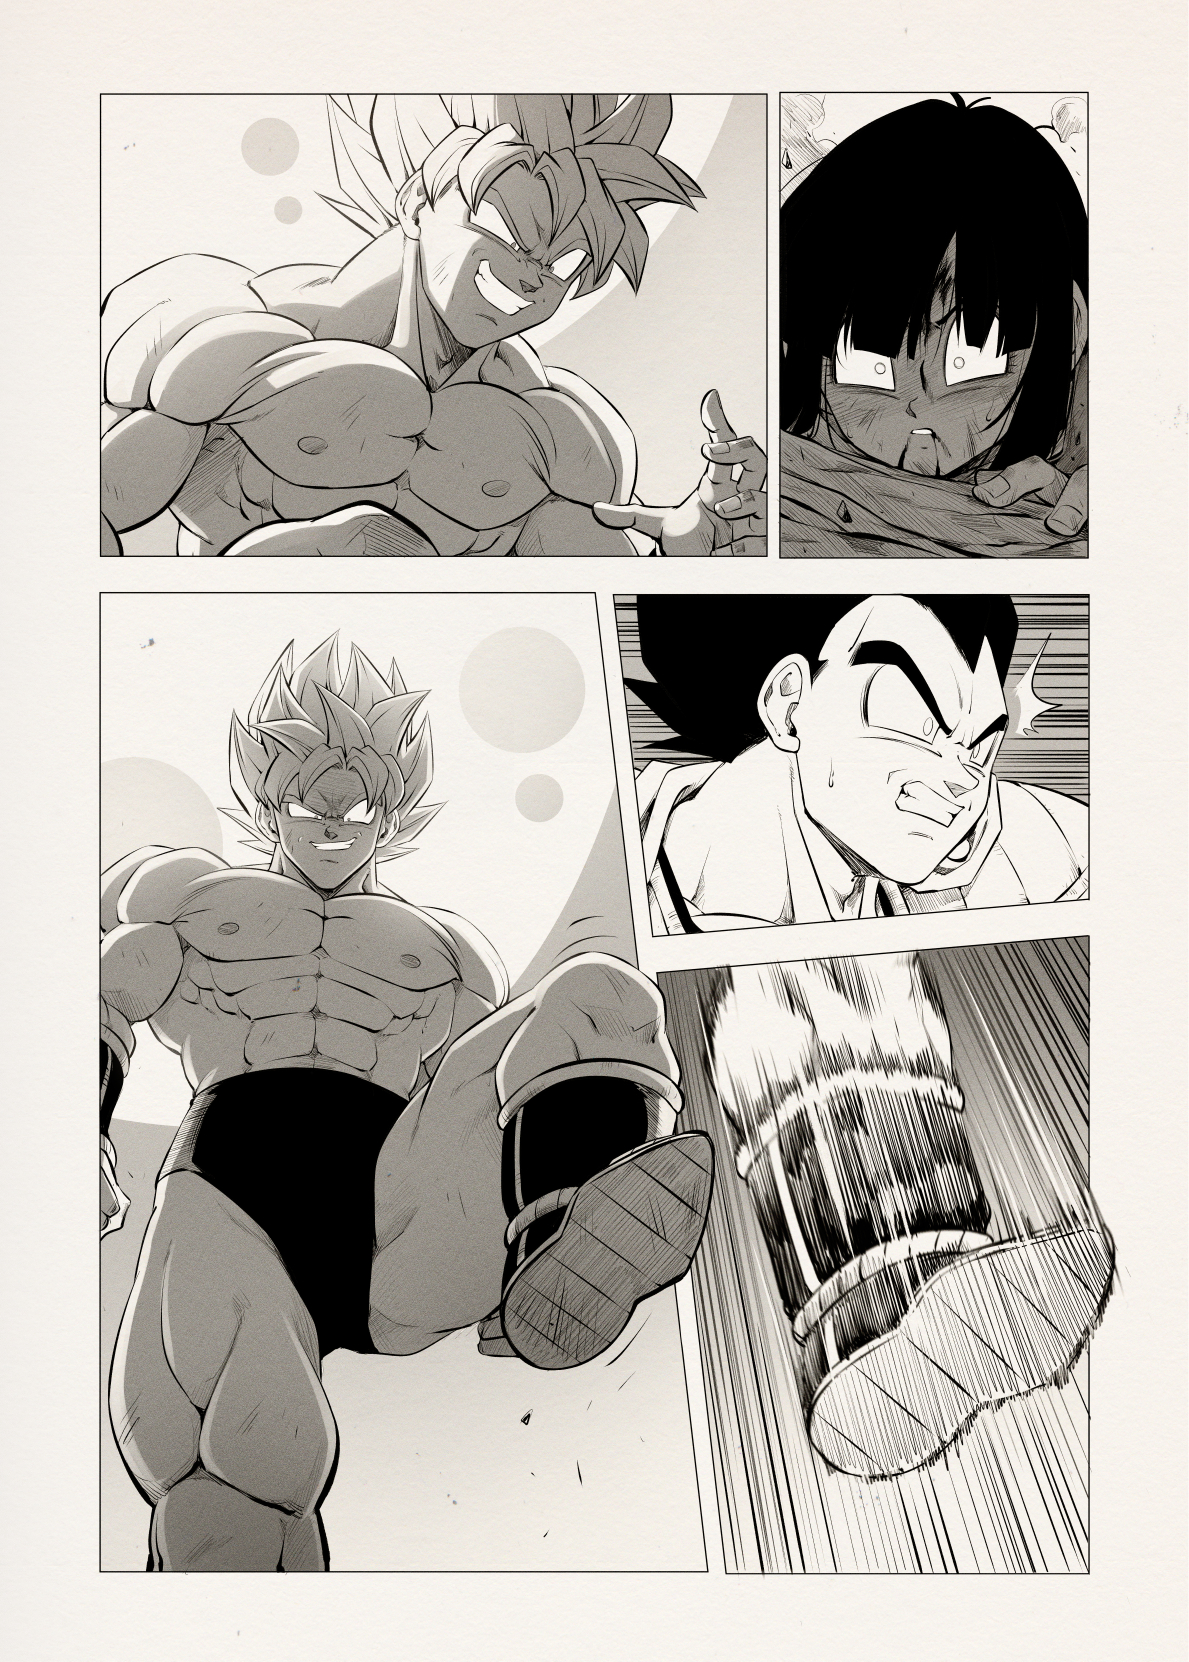 Goku Vs Vegeta by Asura-00 on DeviantArt